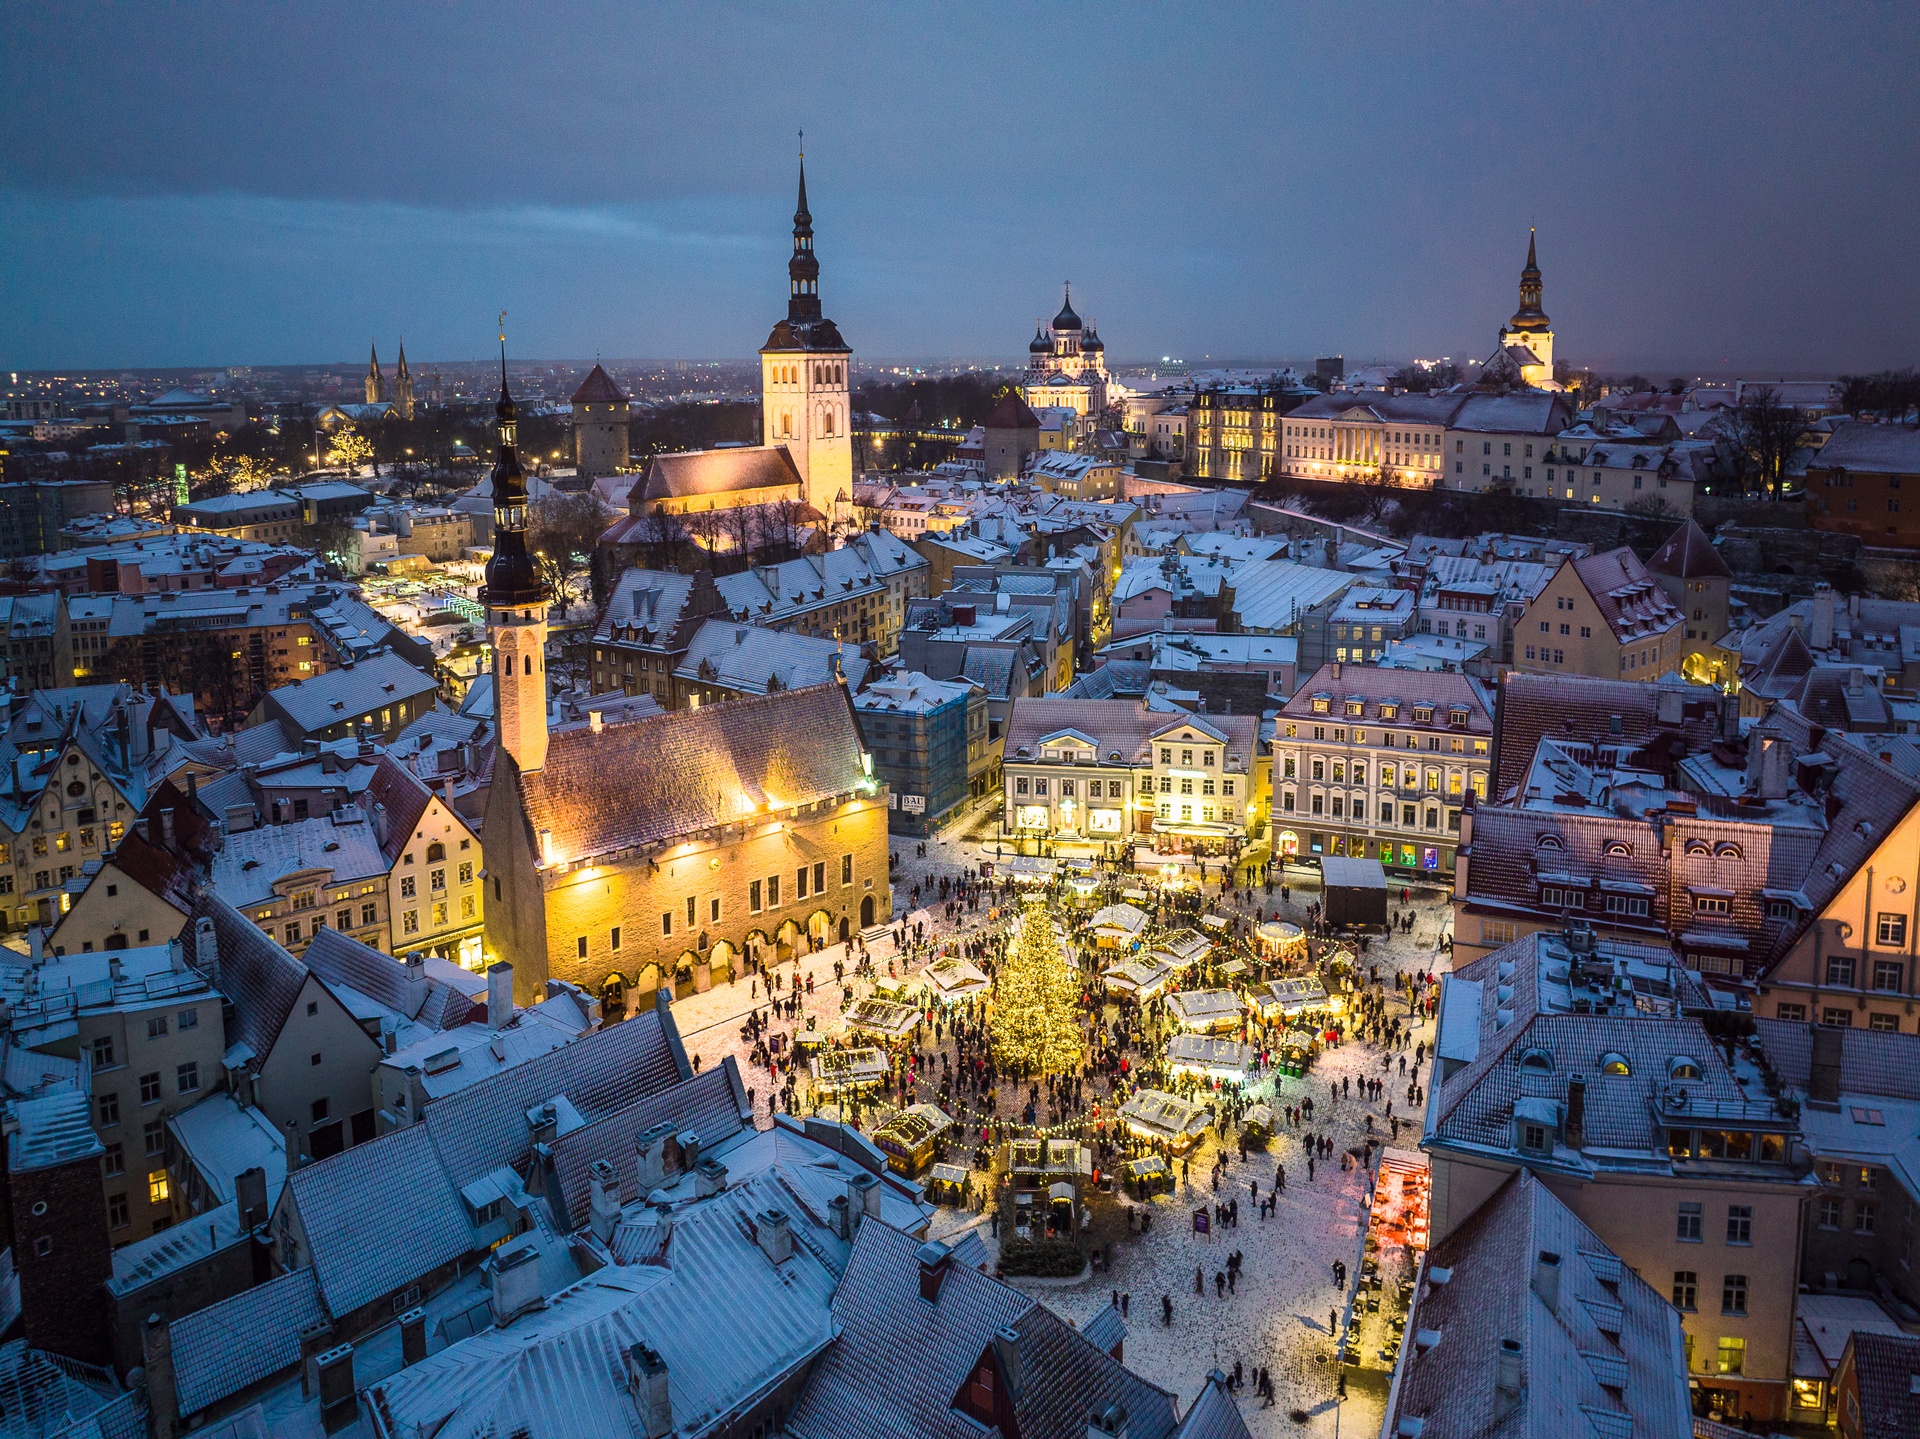 Tallinn Christmas market at night